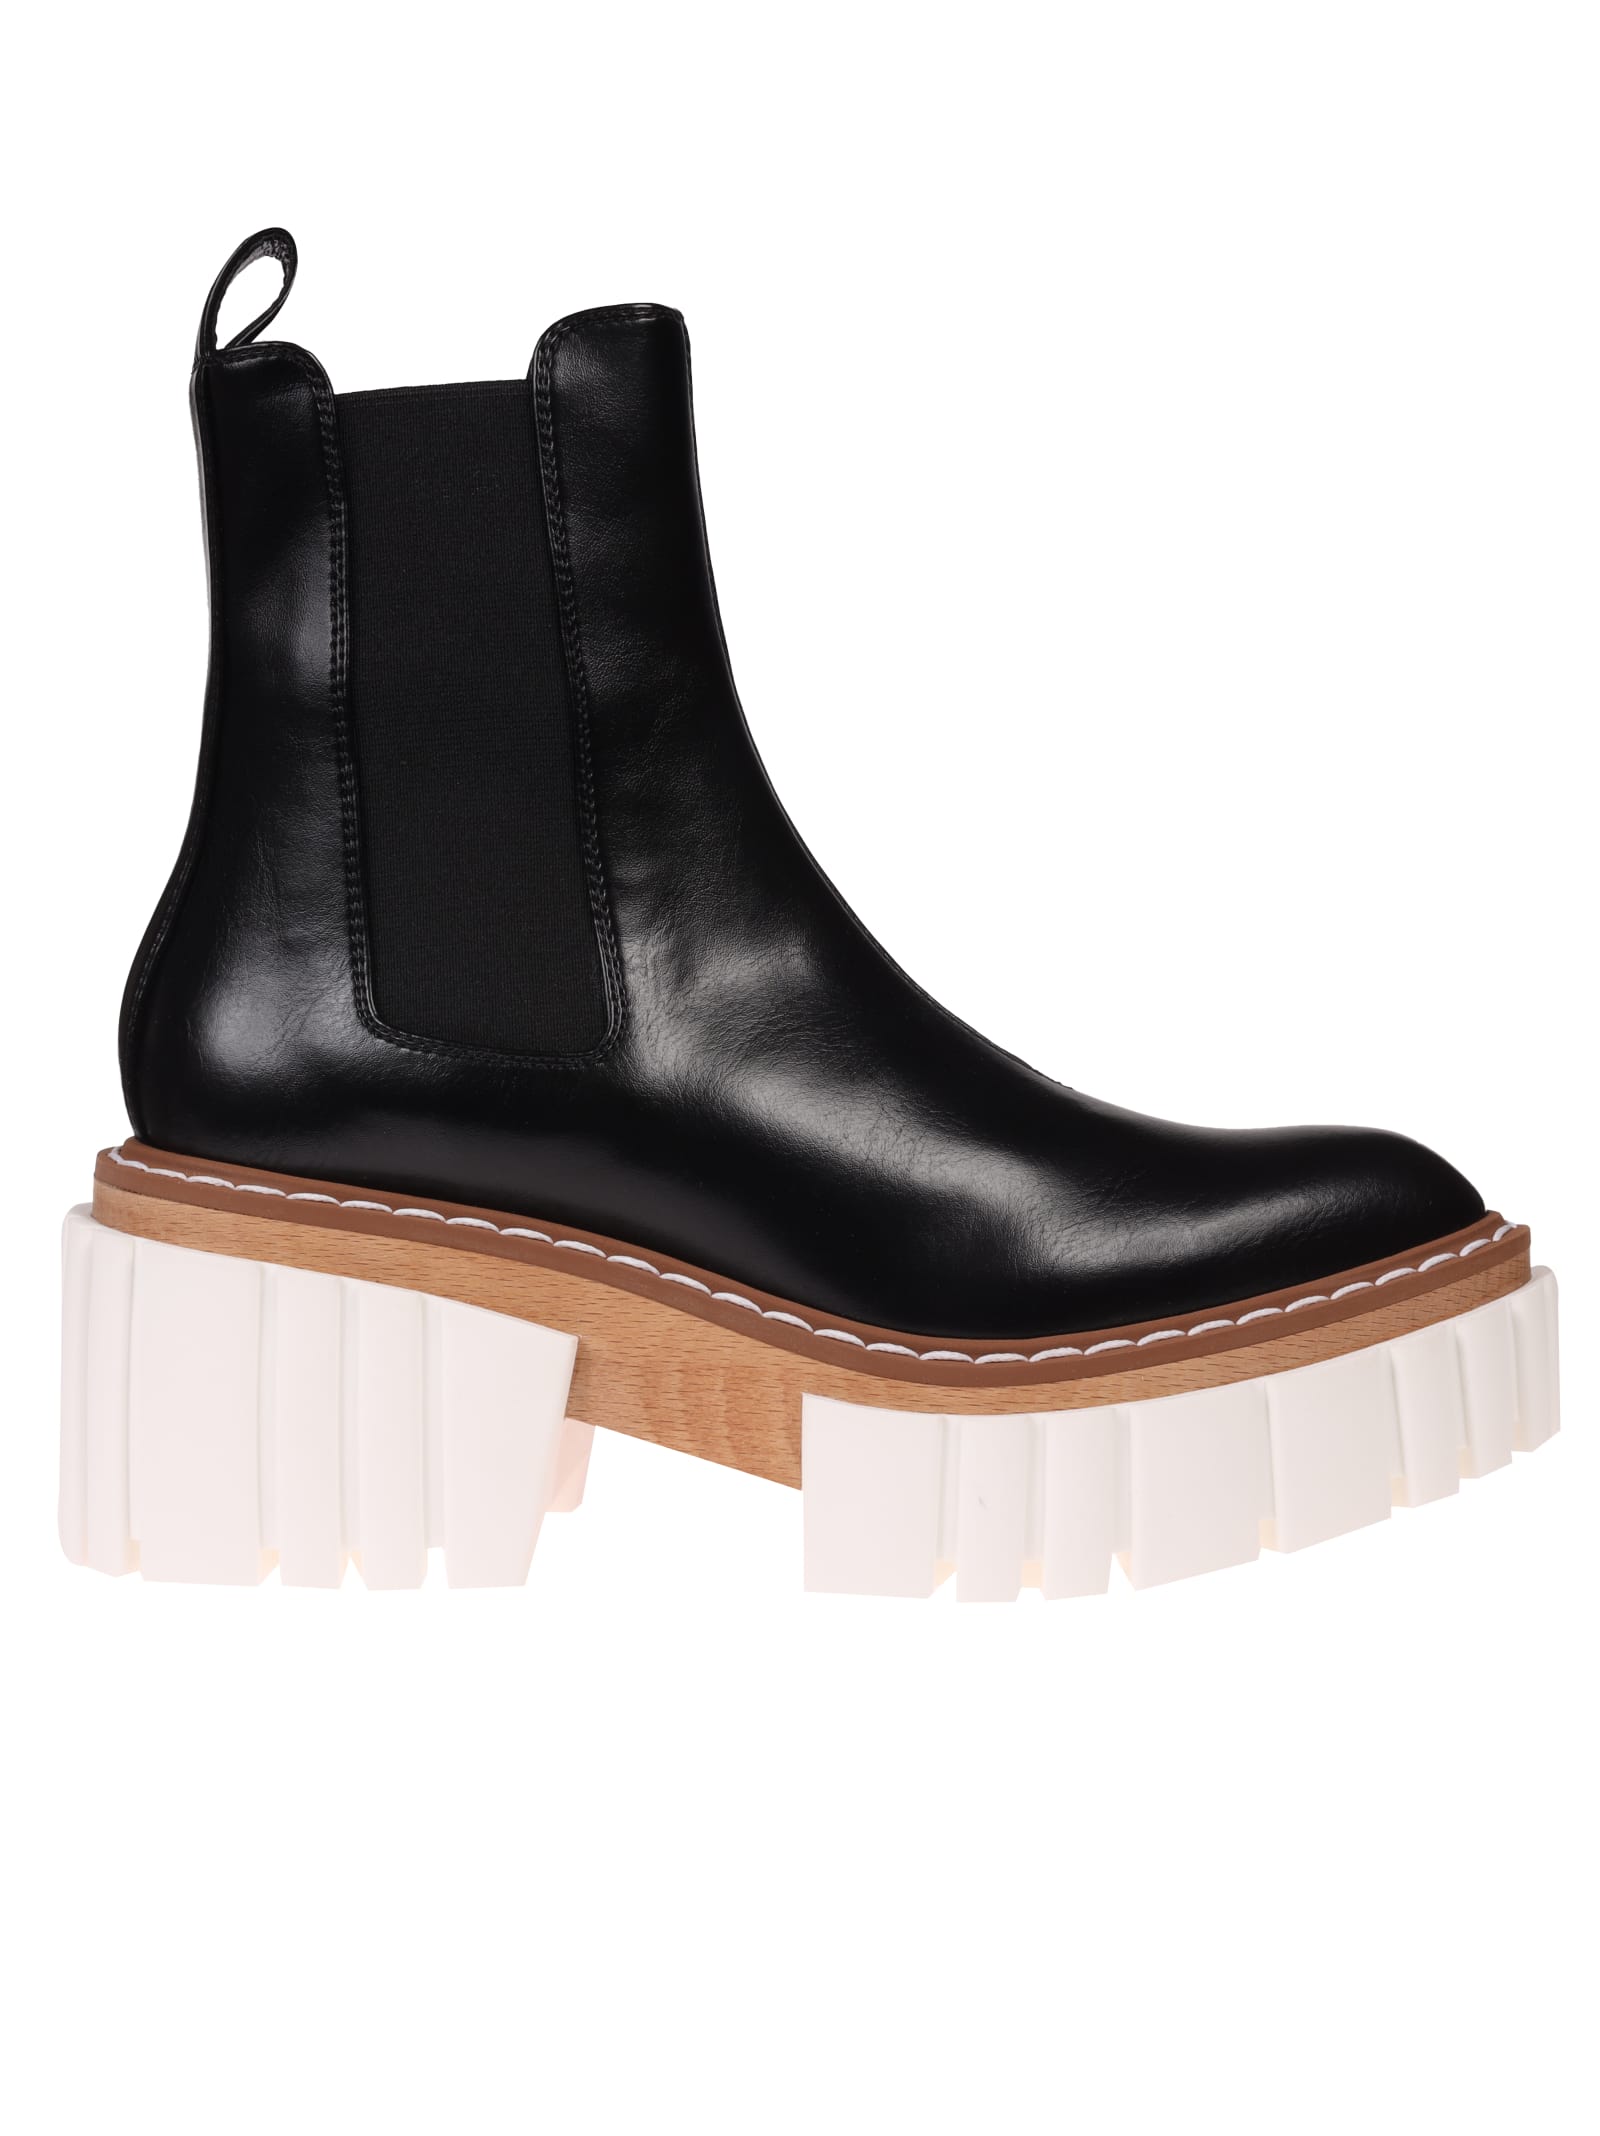 Buy Stella McCartney Emilie High Platform Boots online, shop Stella McCartney shoes with free shipping